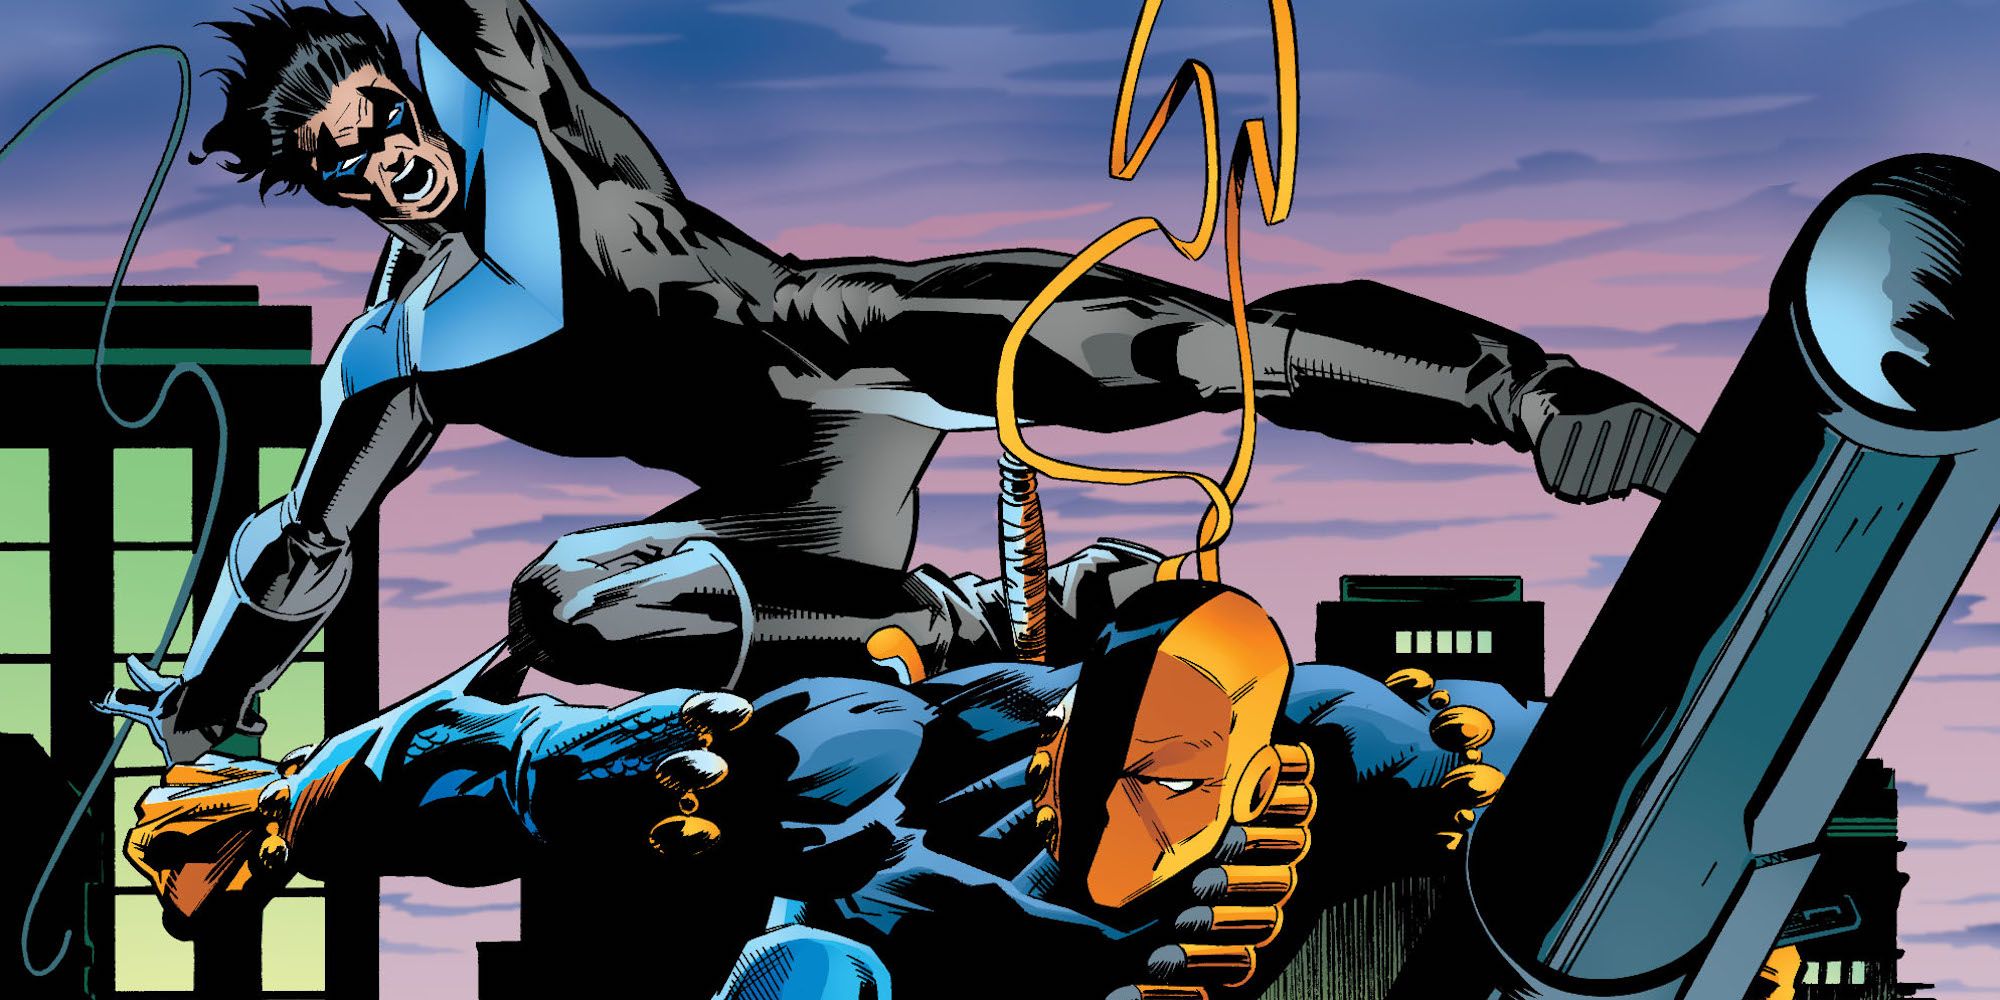 Nightwing fighting Deathstroke in DC Comics